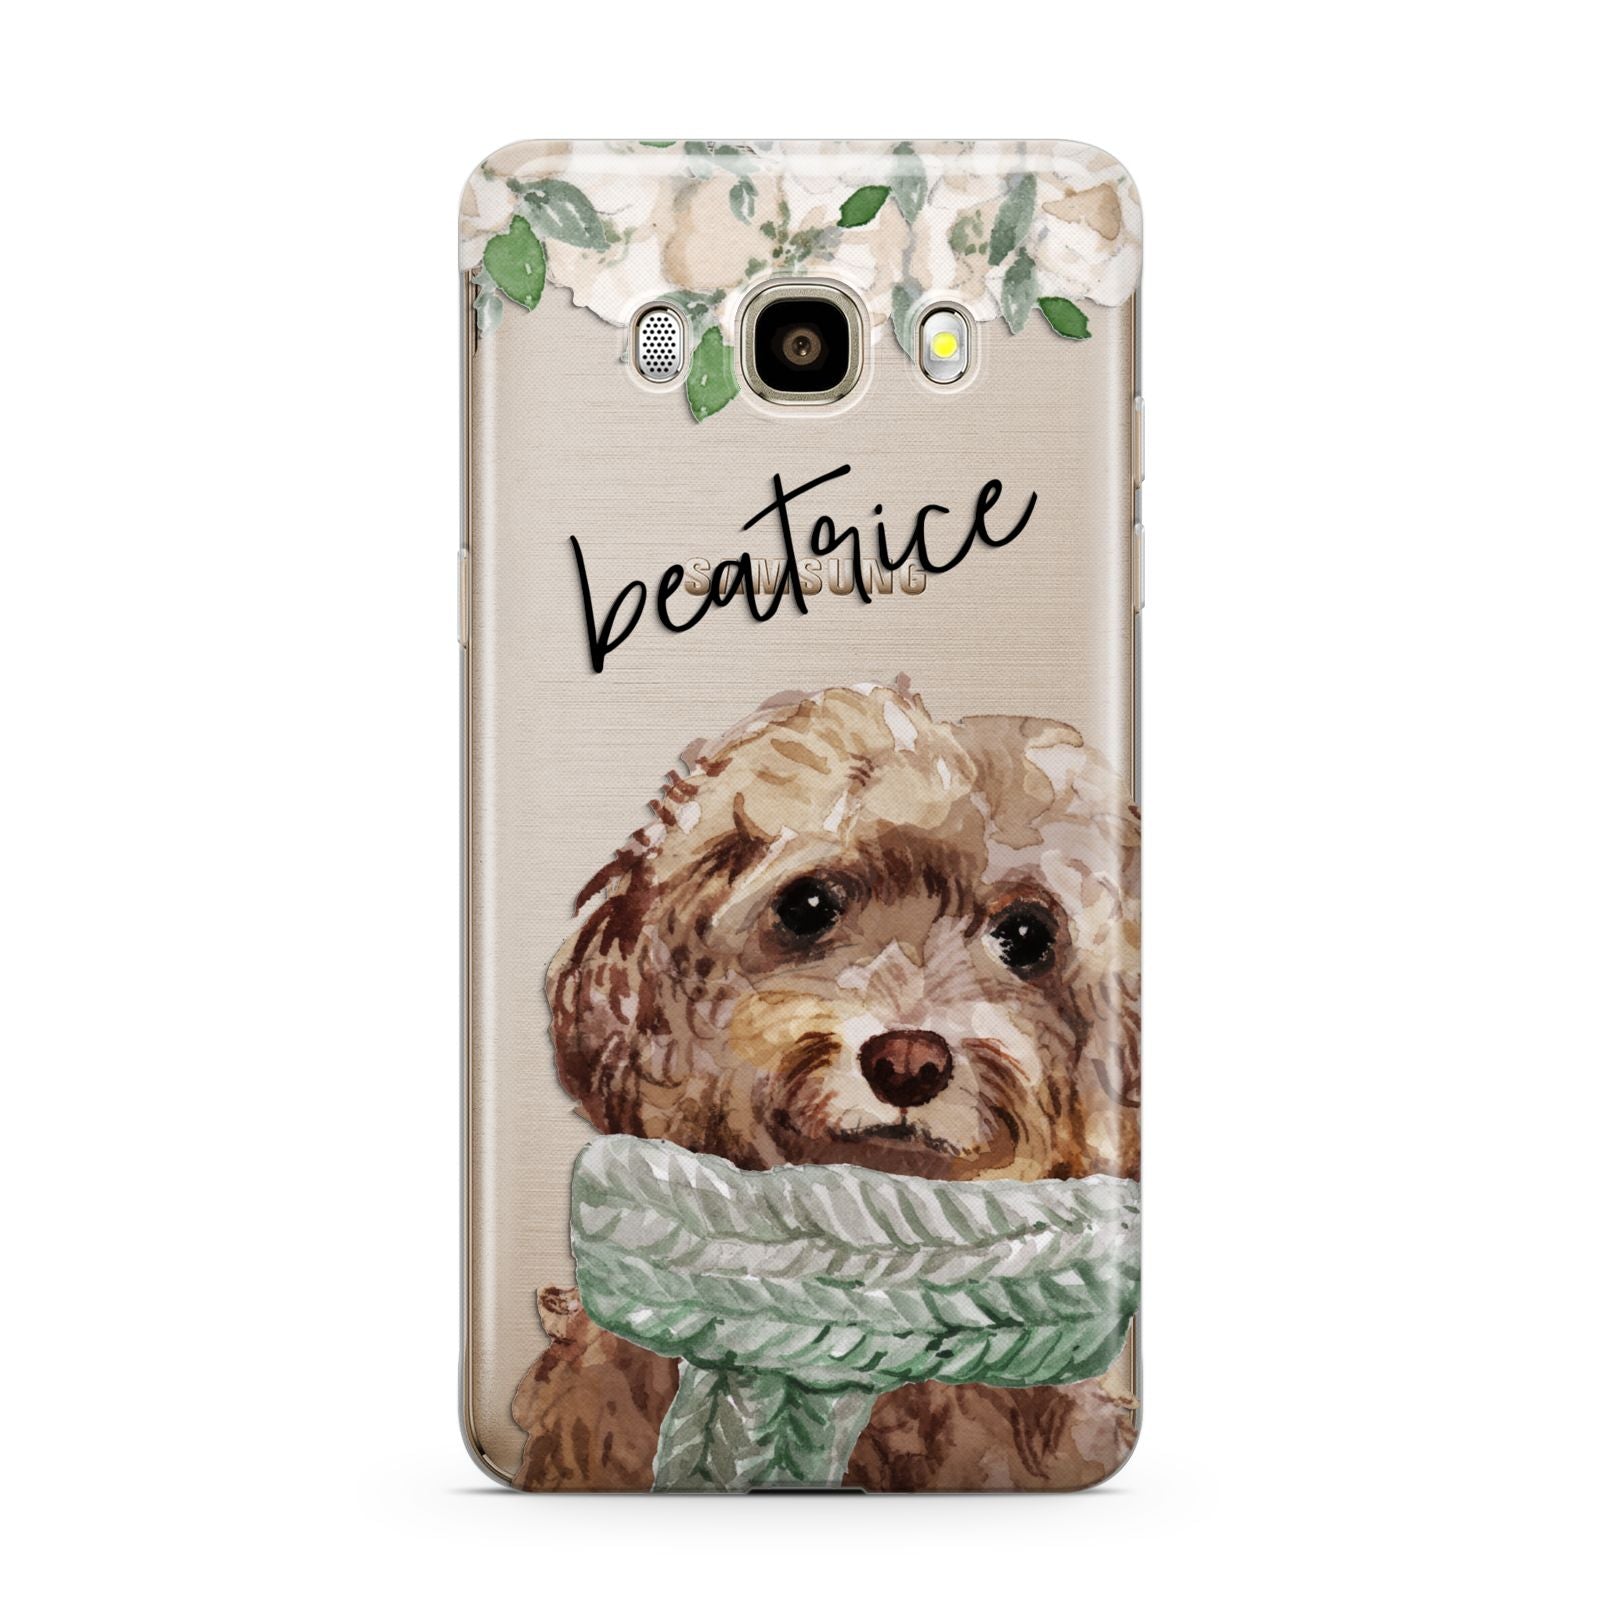 Personalised Cockapoo Dog Samsung Galaxy J7 2016 Case on gold phone